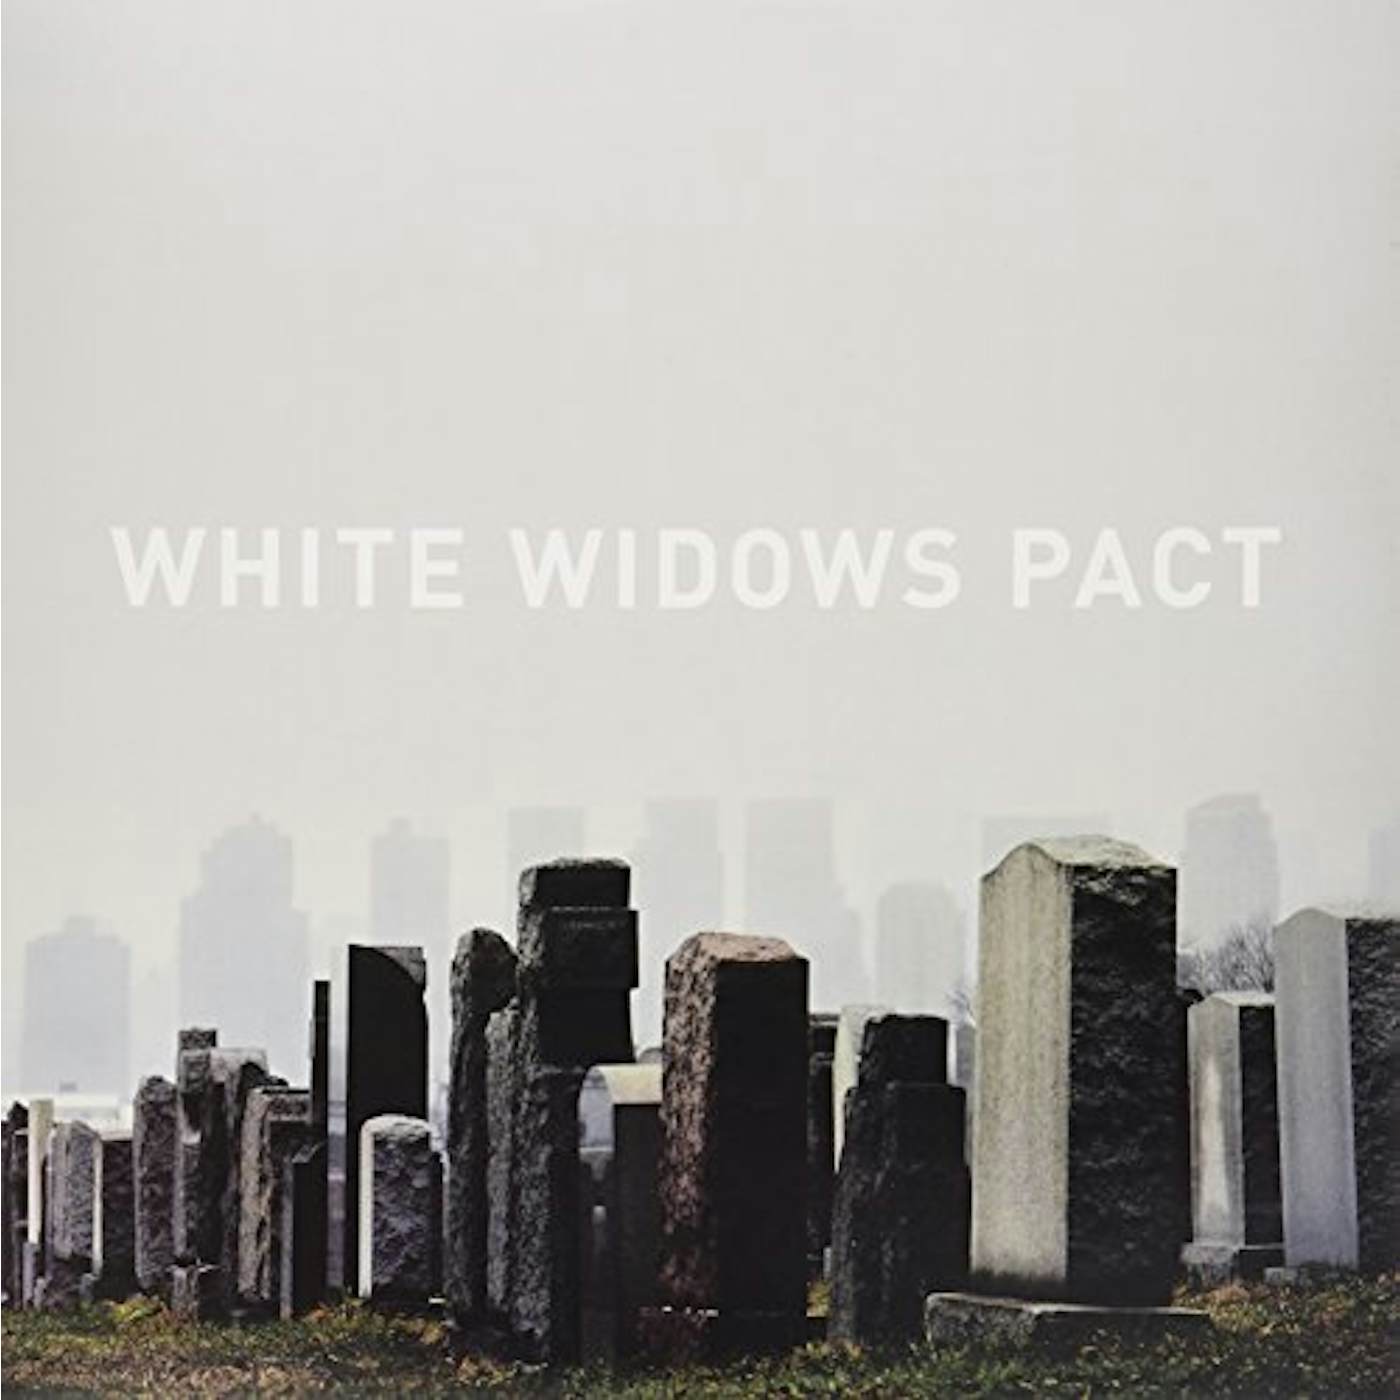 WHITE WIDOWS PACT Vinyl Record